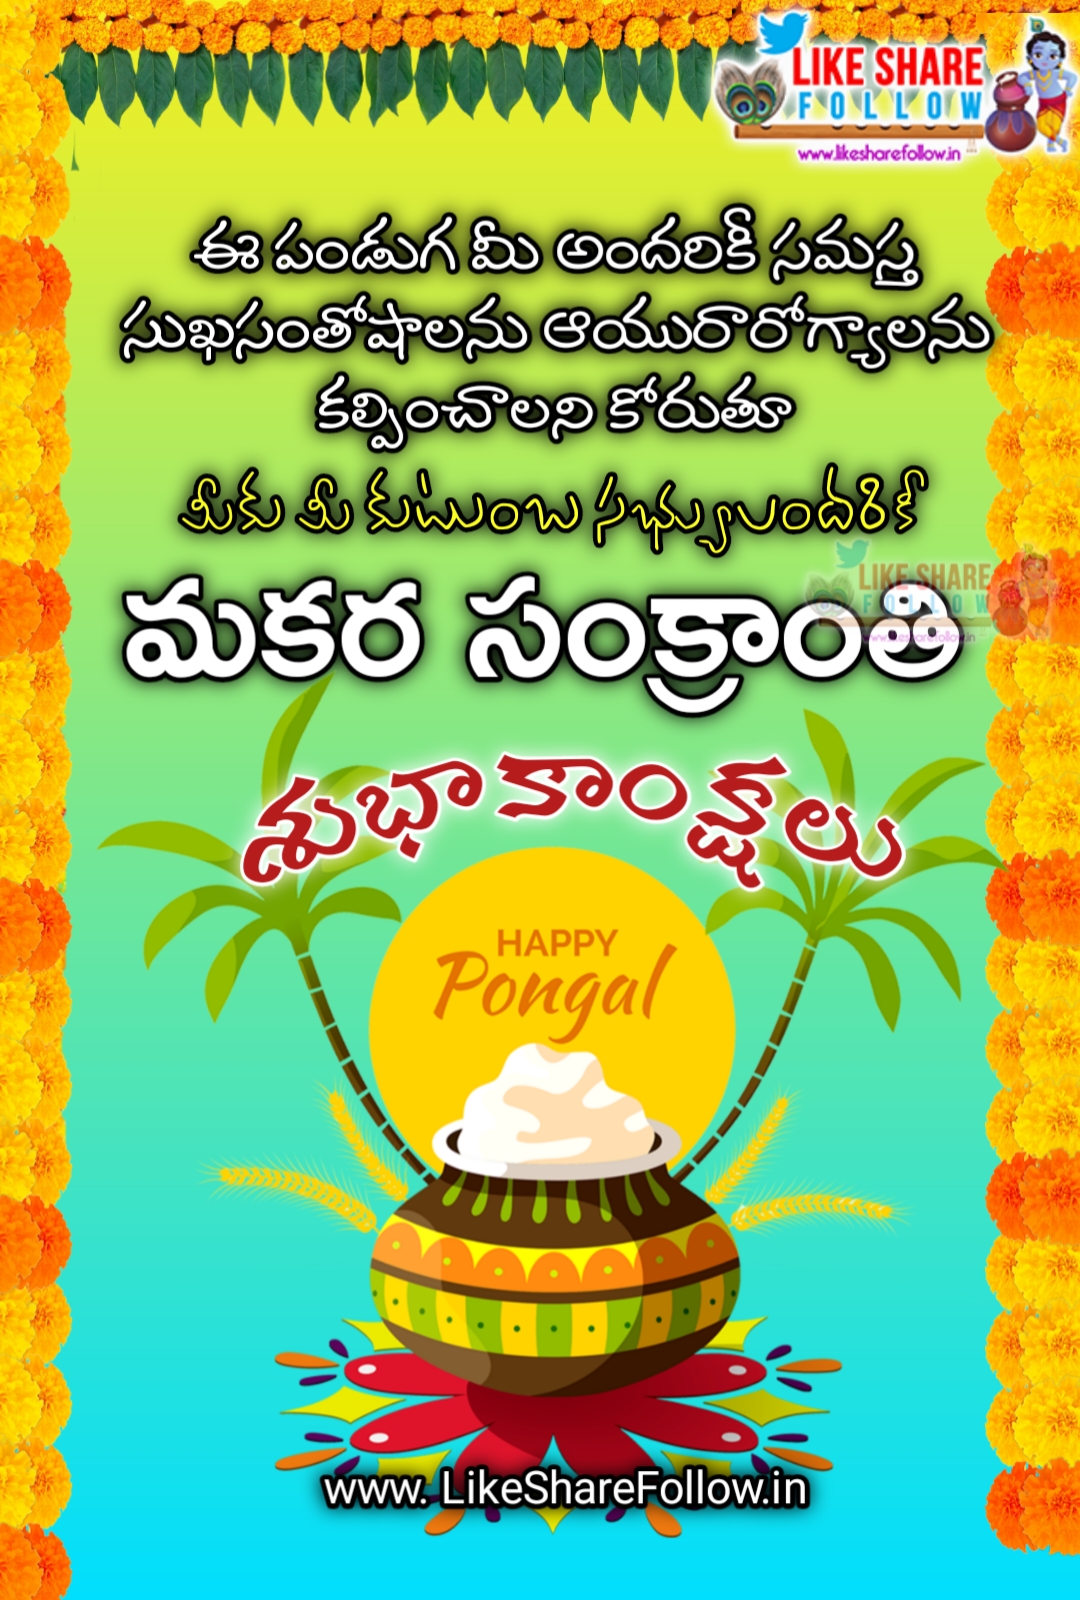 Pongal greetings in Telugu image | Like Share Follow